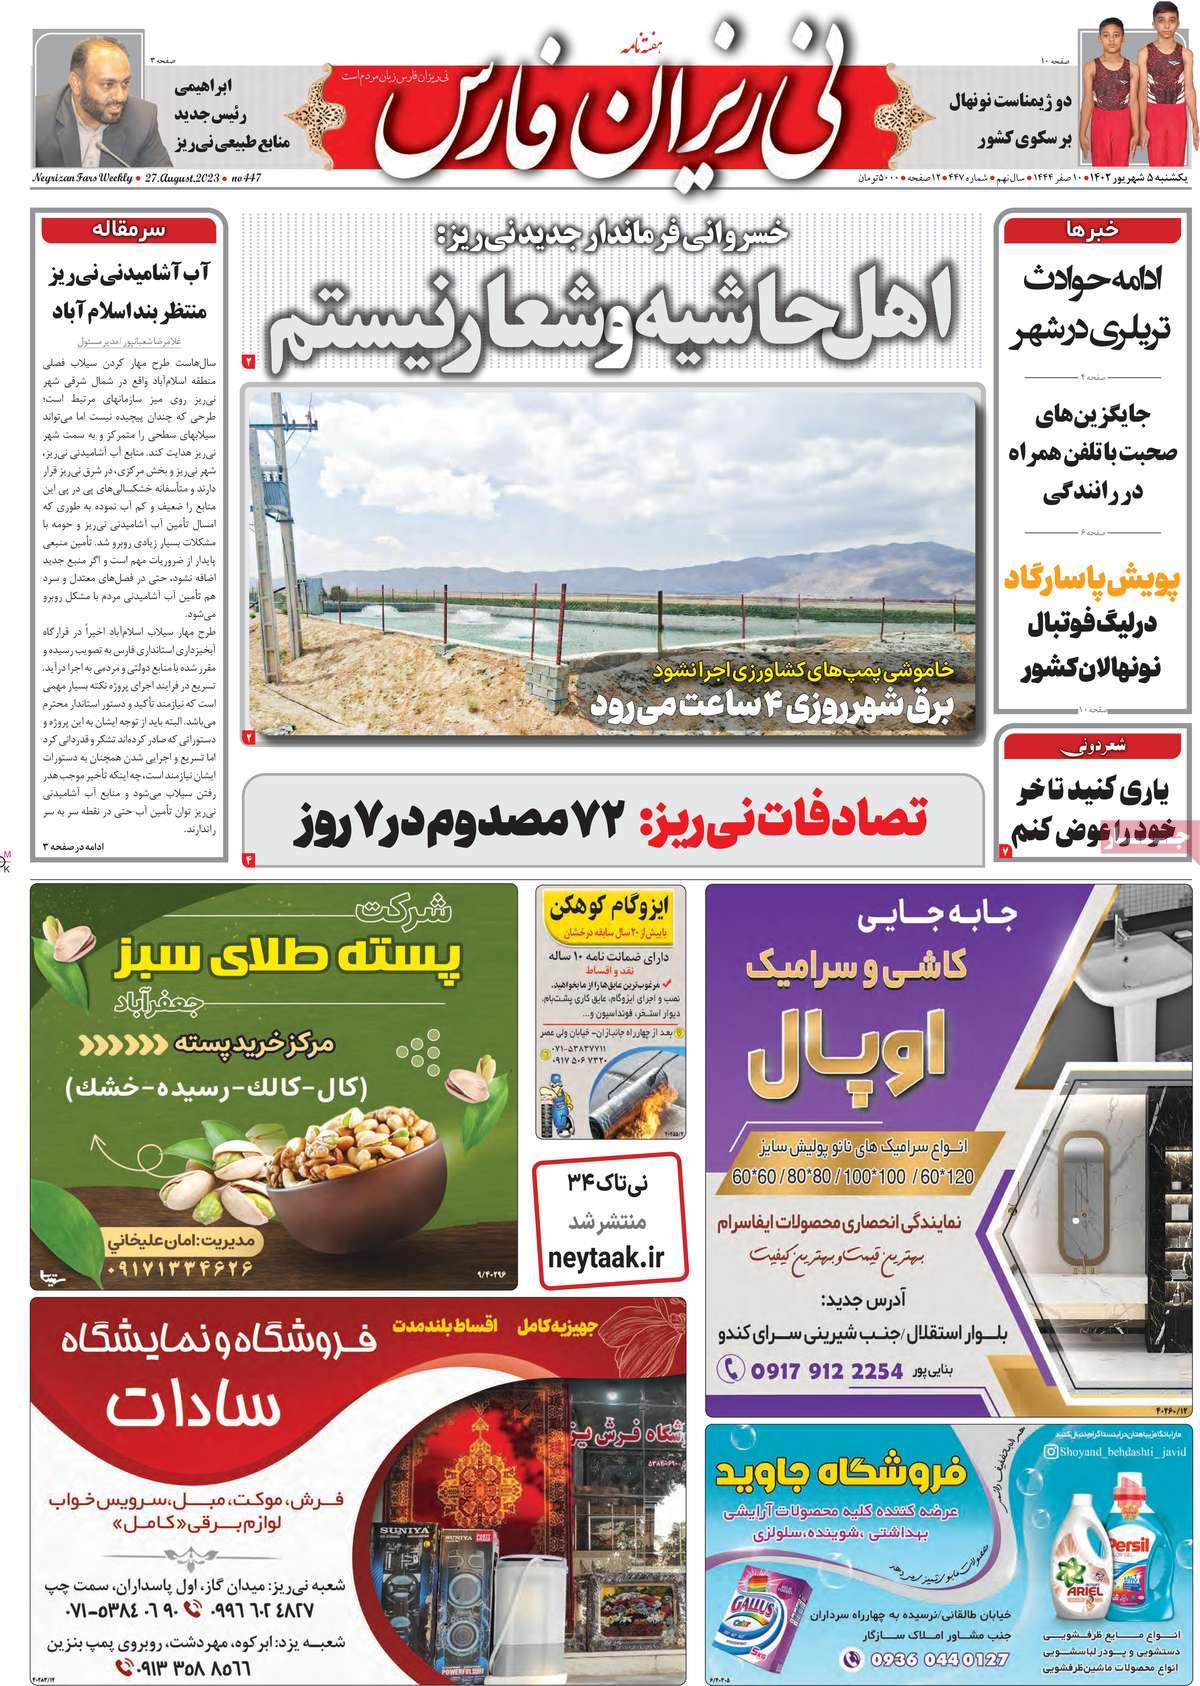 مجله نی ریزان فارس